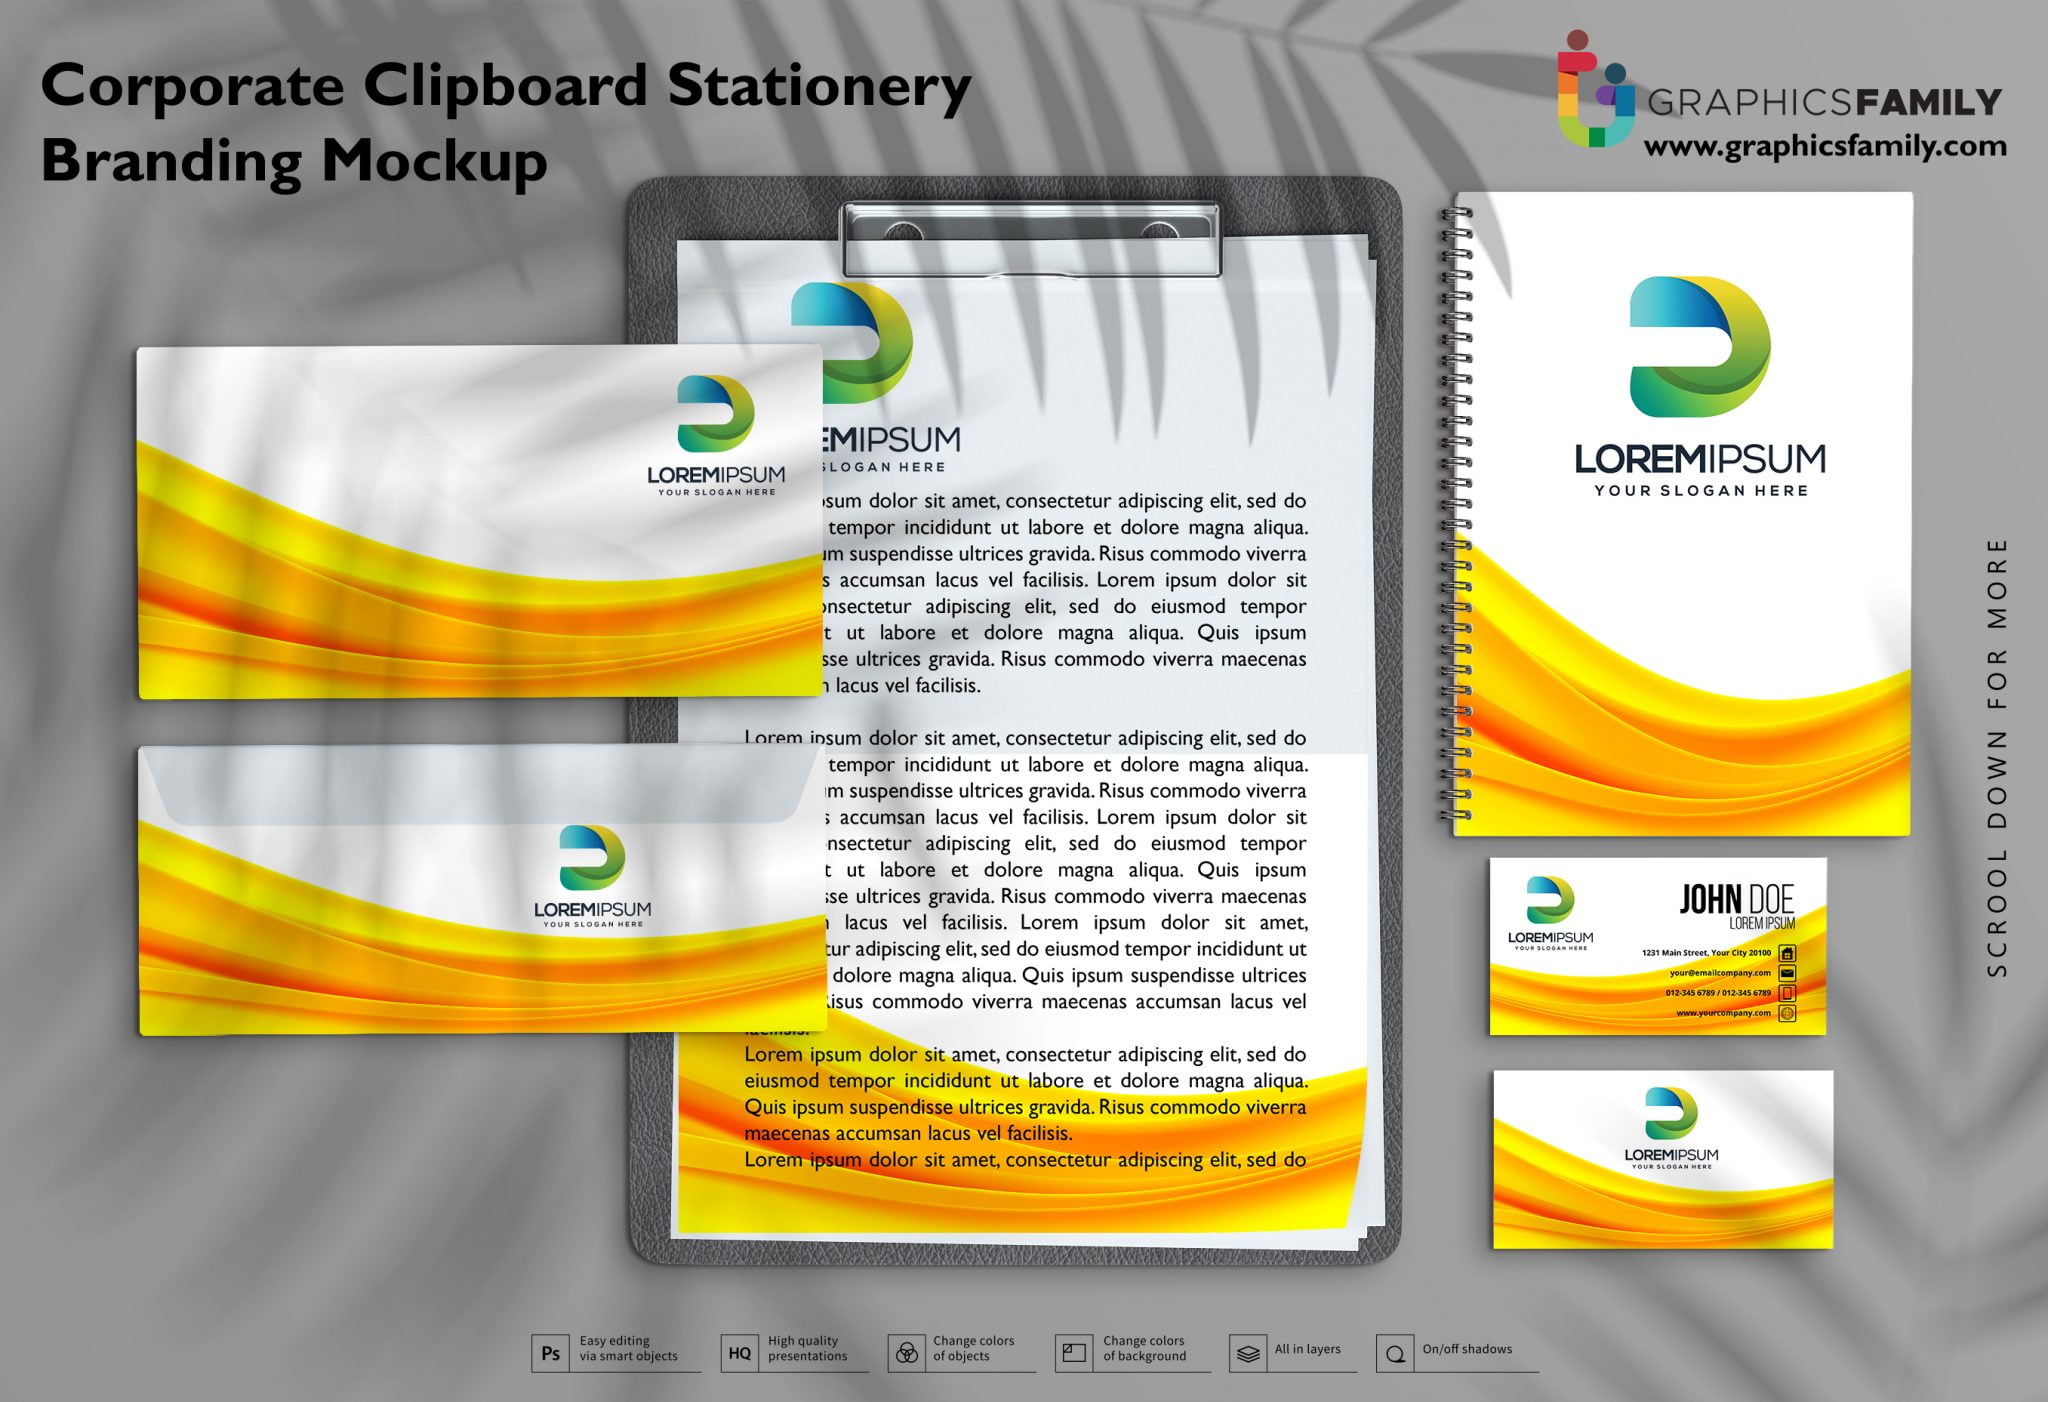 Download Corporate Clipboard Stationery Branding Mockup ...